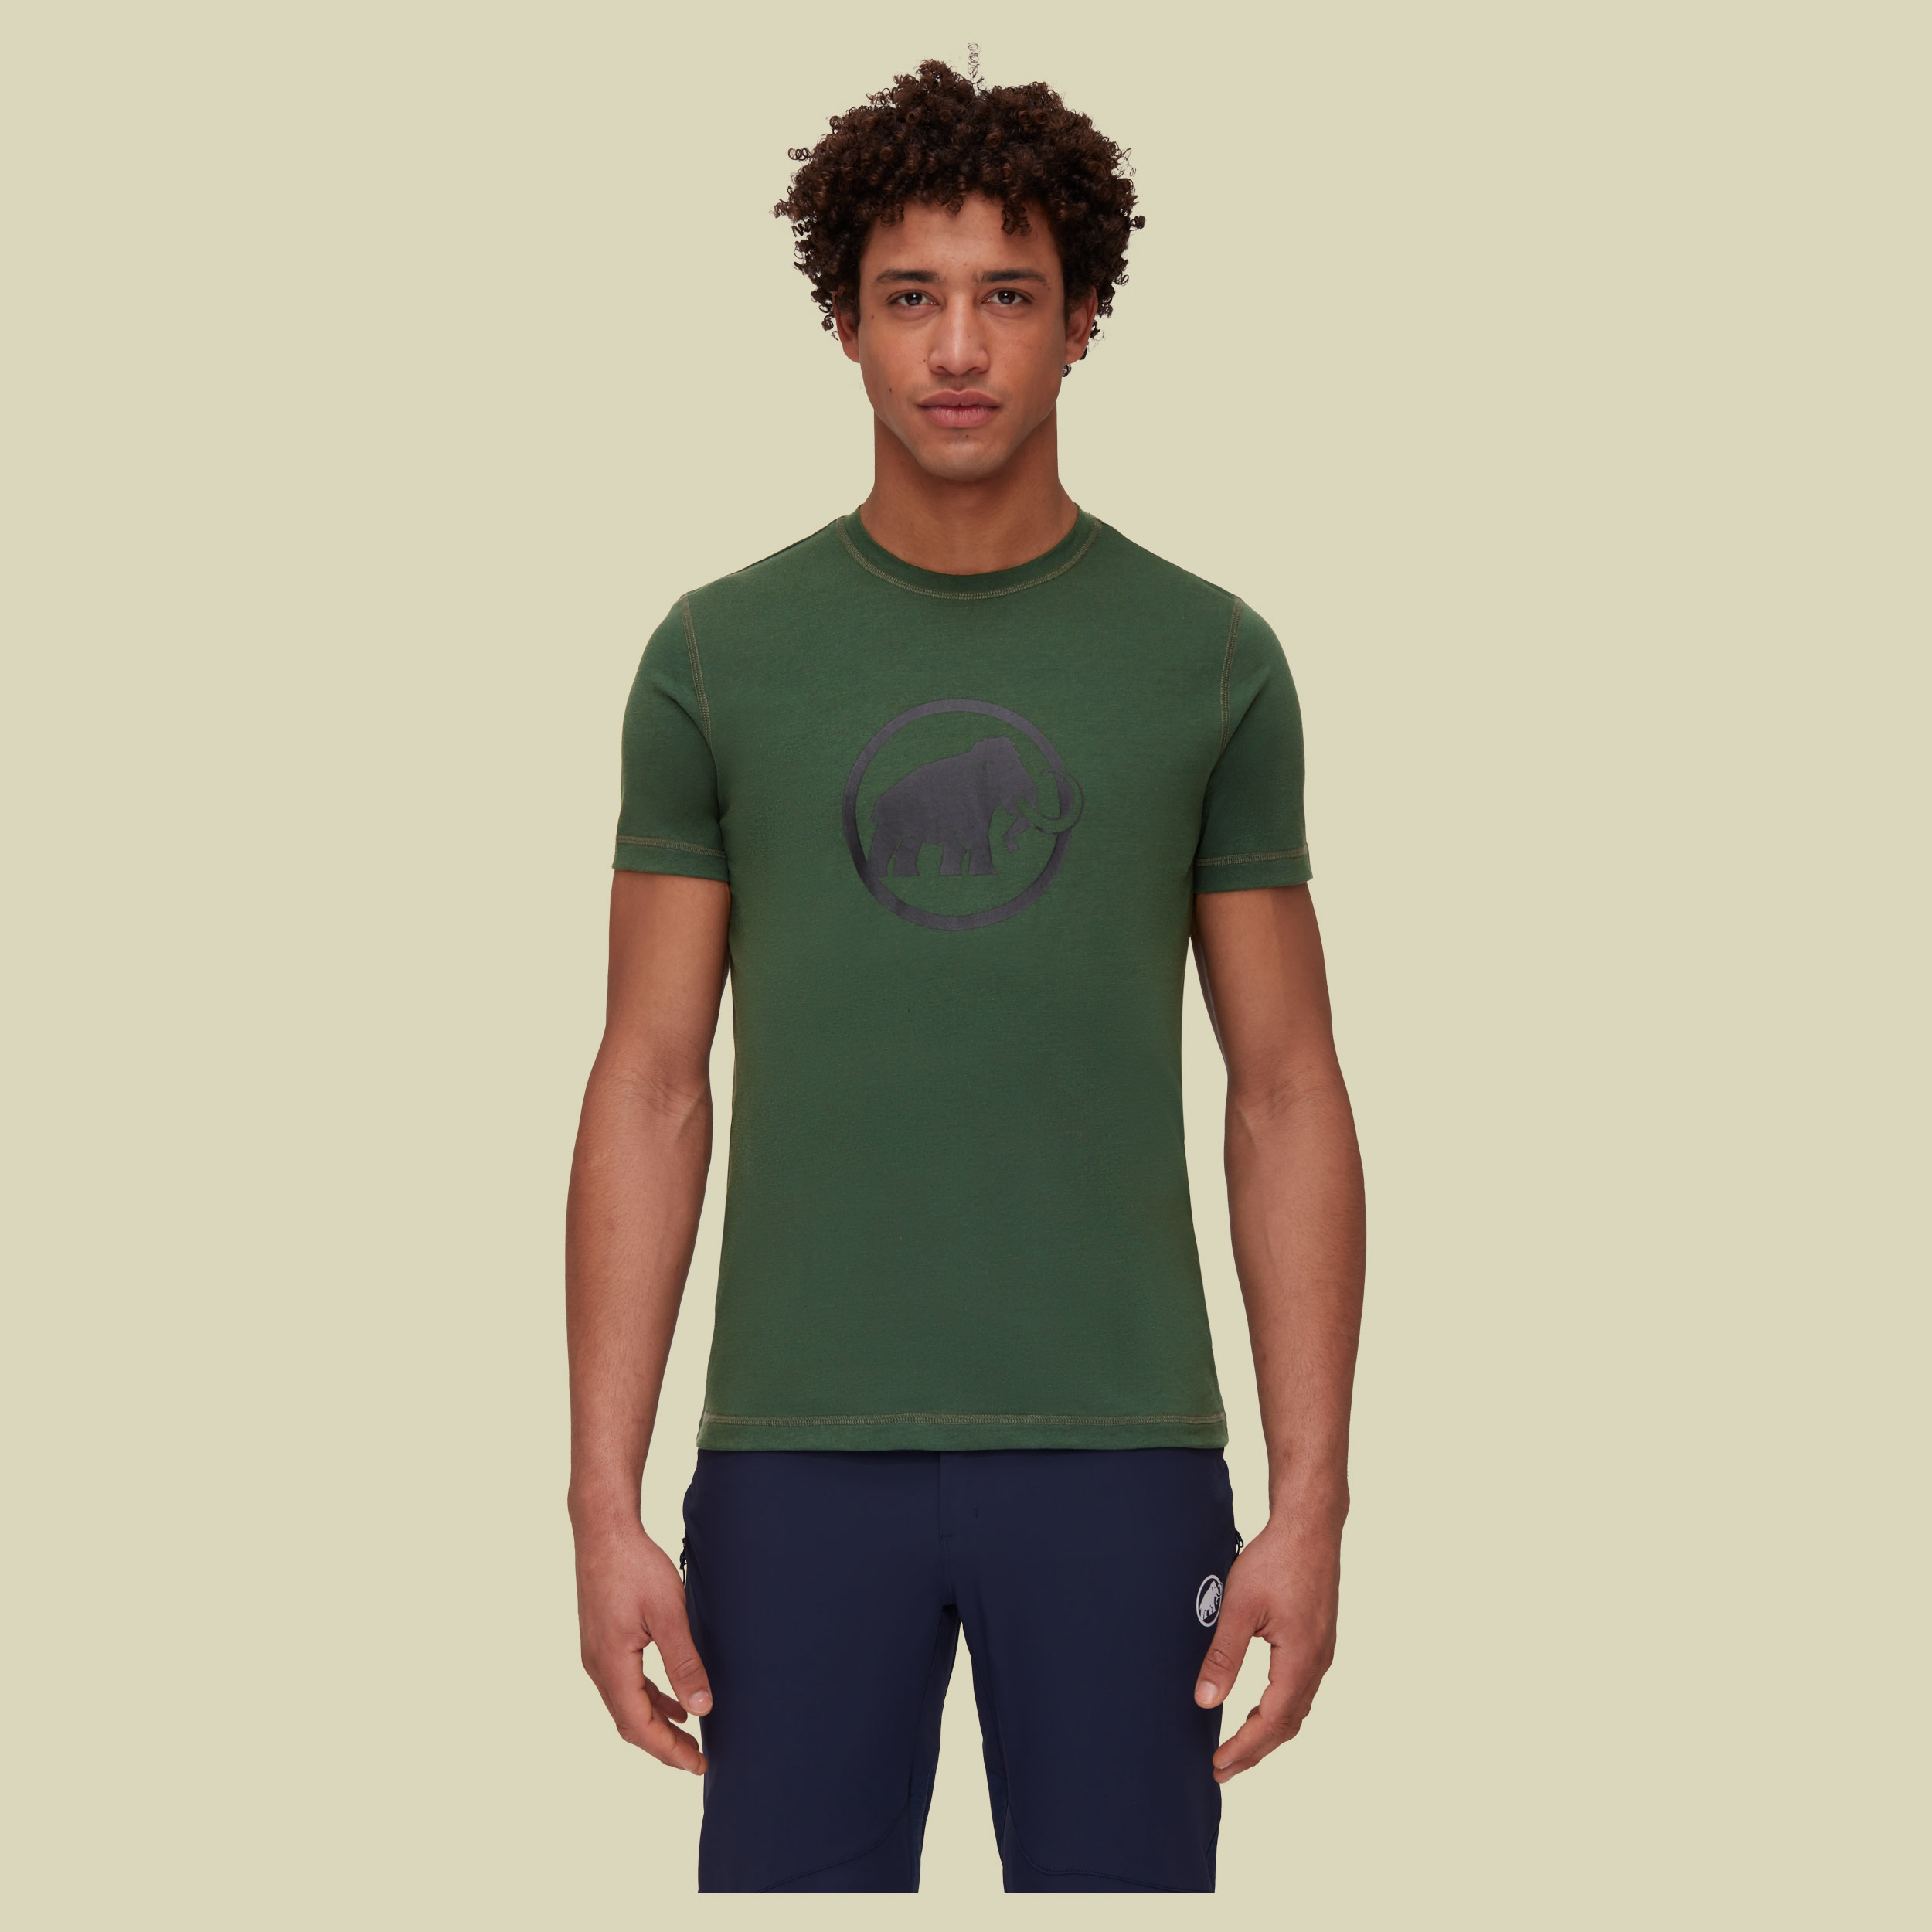 Mammut Core T-Shirt Men Classic Größe S Farbe woods